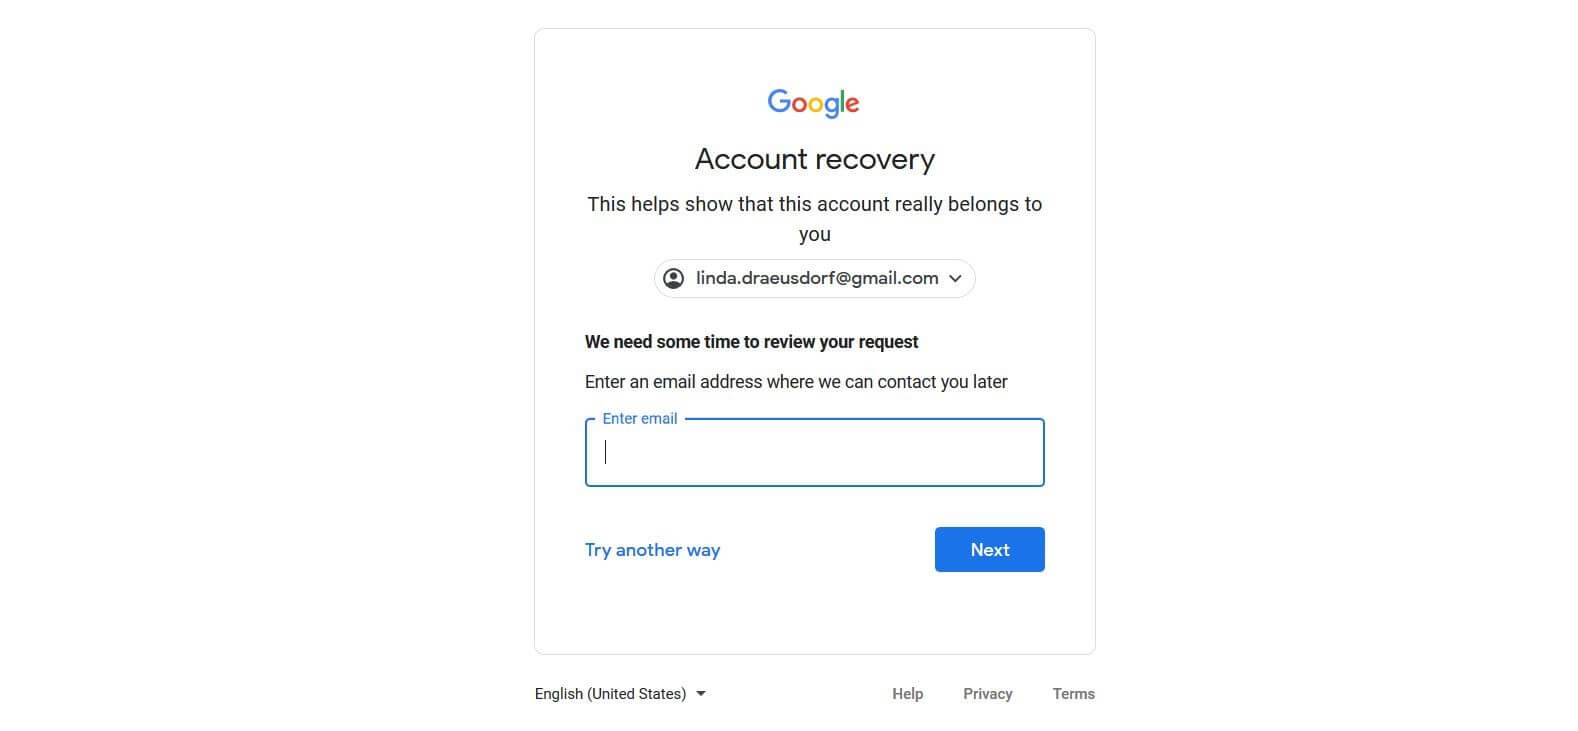 Google form for entering a current email address